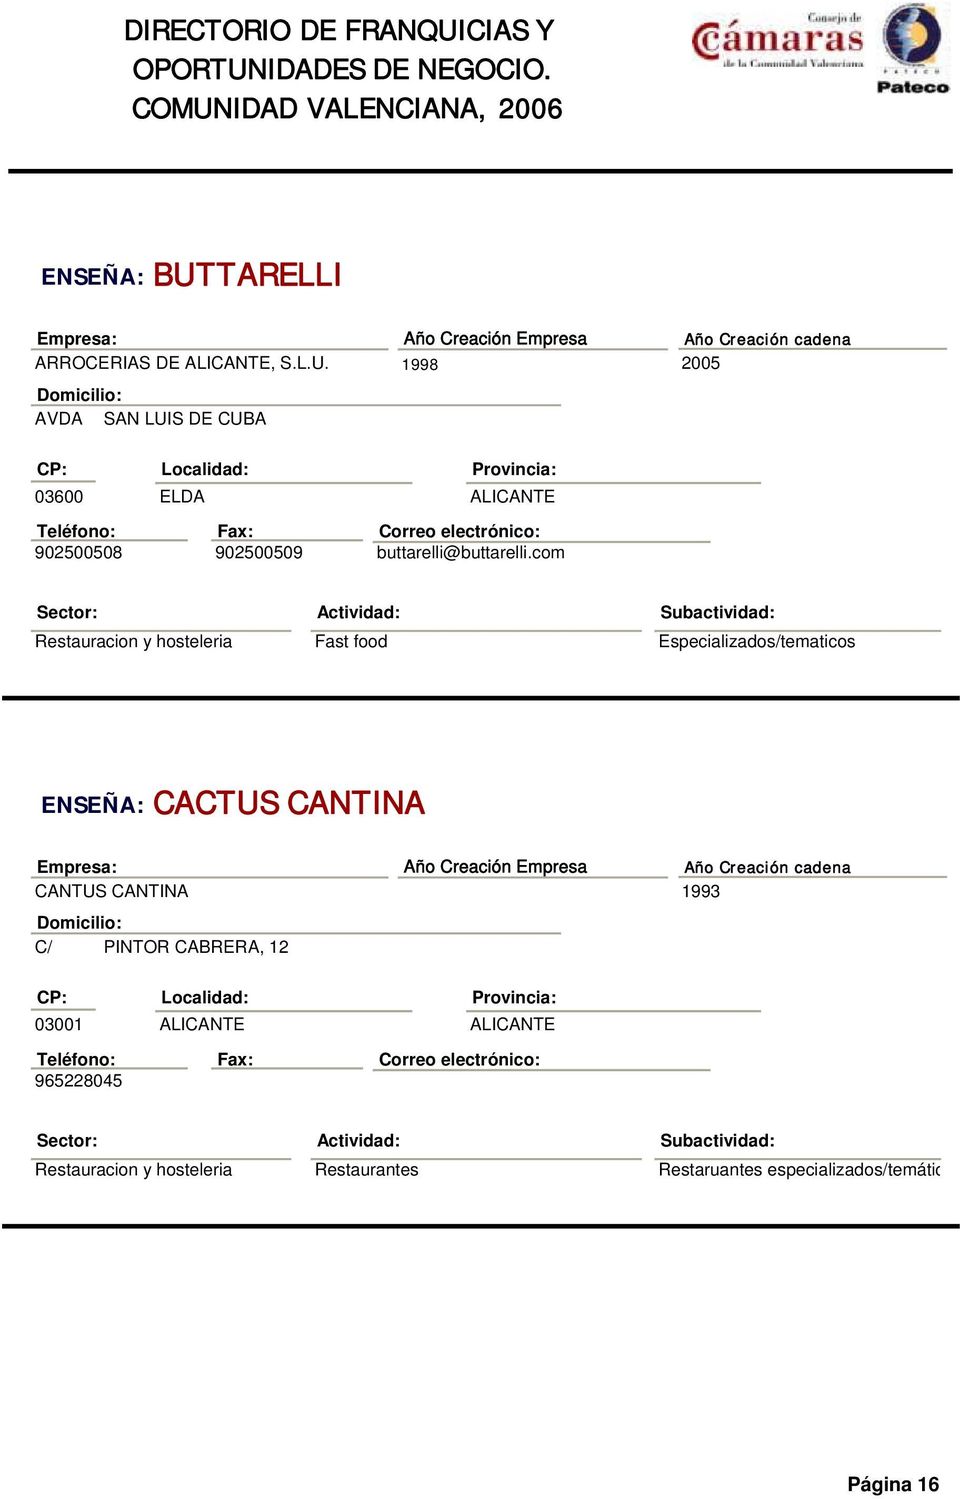 CANTUS CANTINA C/ PINTOR CABRERA, 12 1993 03001 965228045 Restauracion y hosteleria